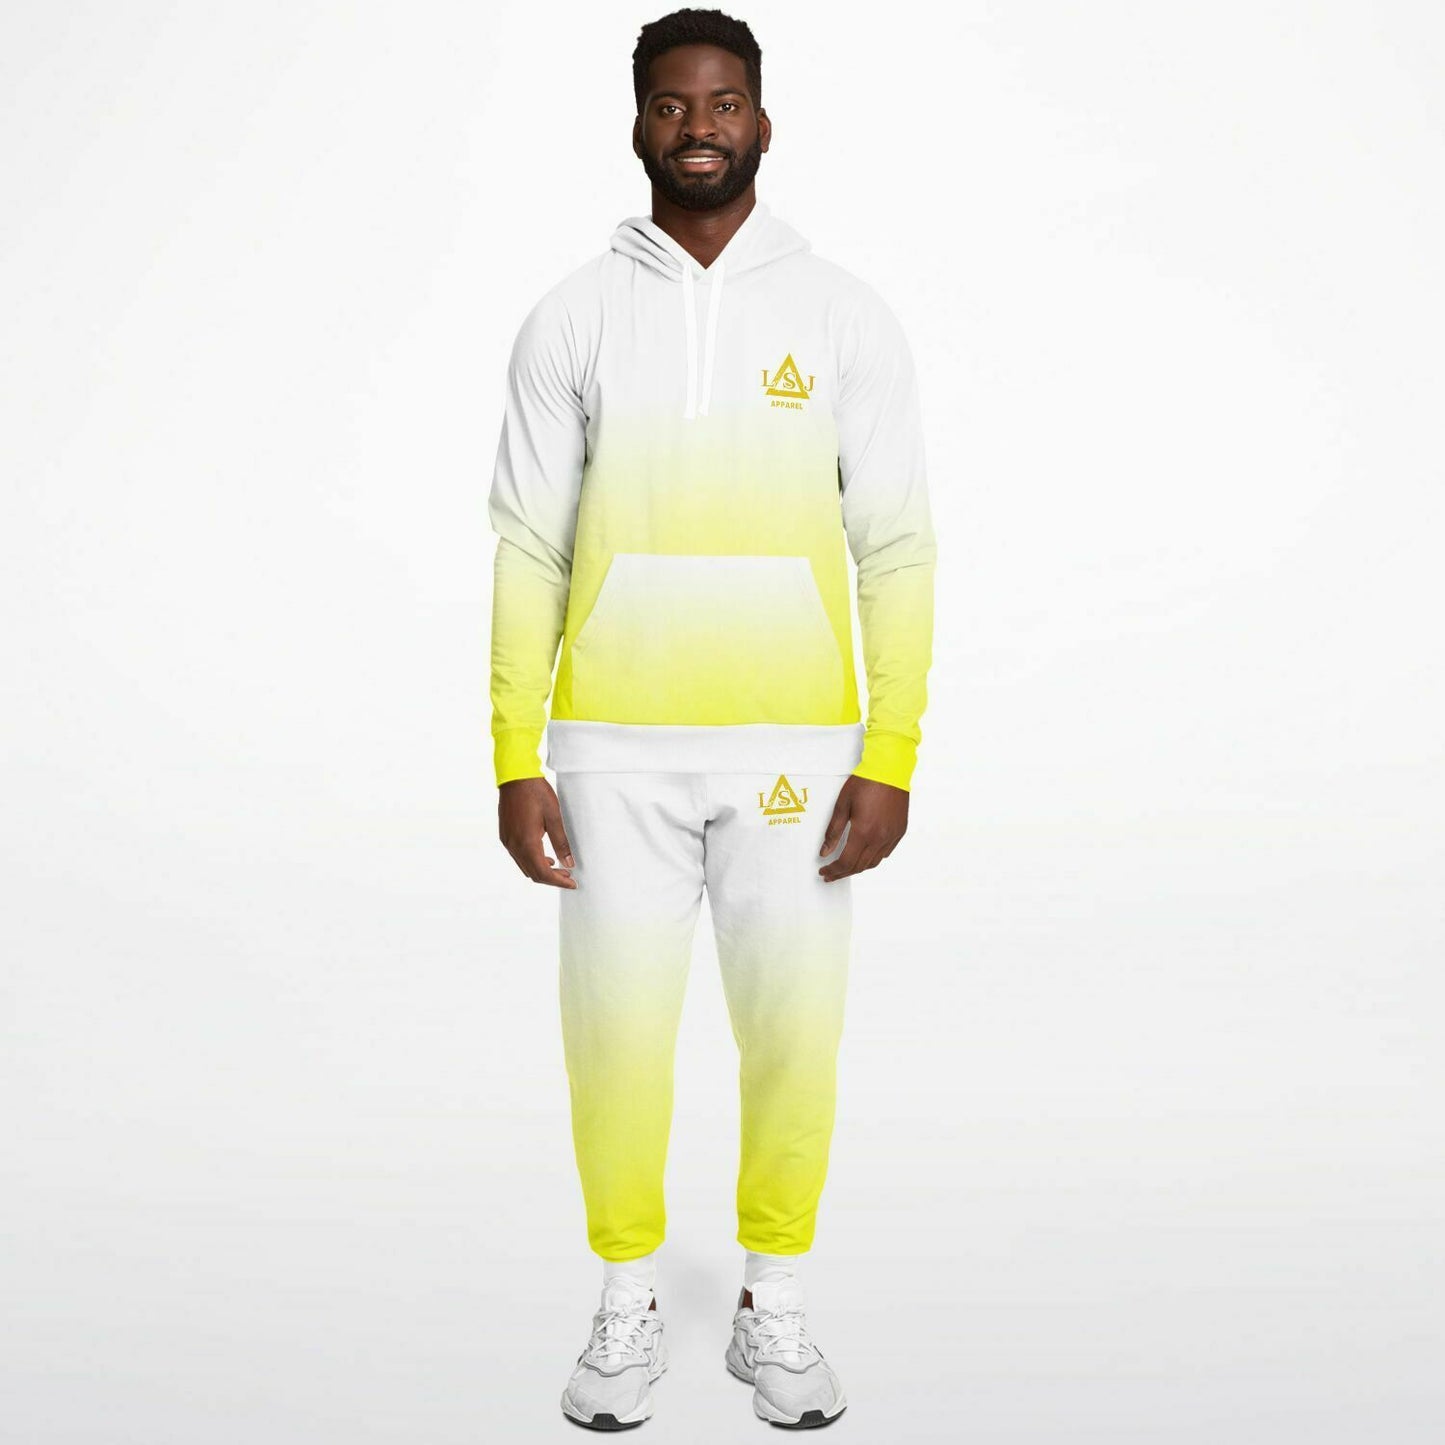 LSJ White & Yellow Sweat Suit